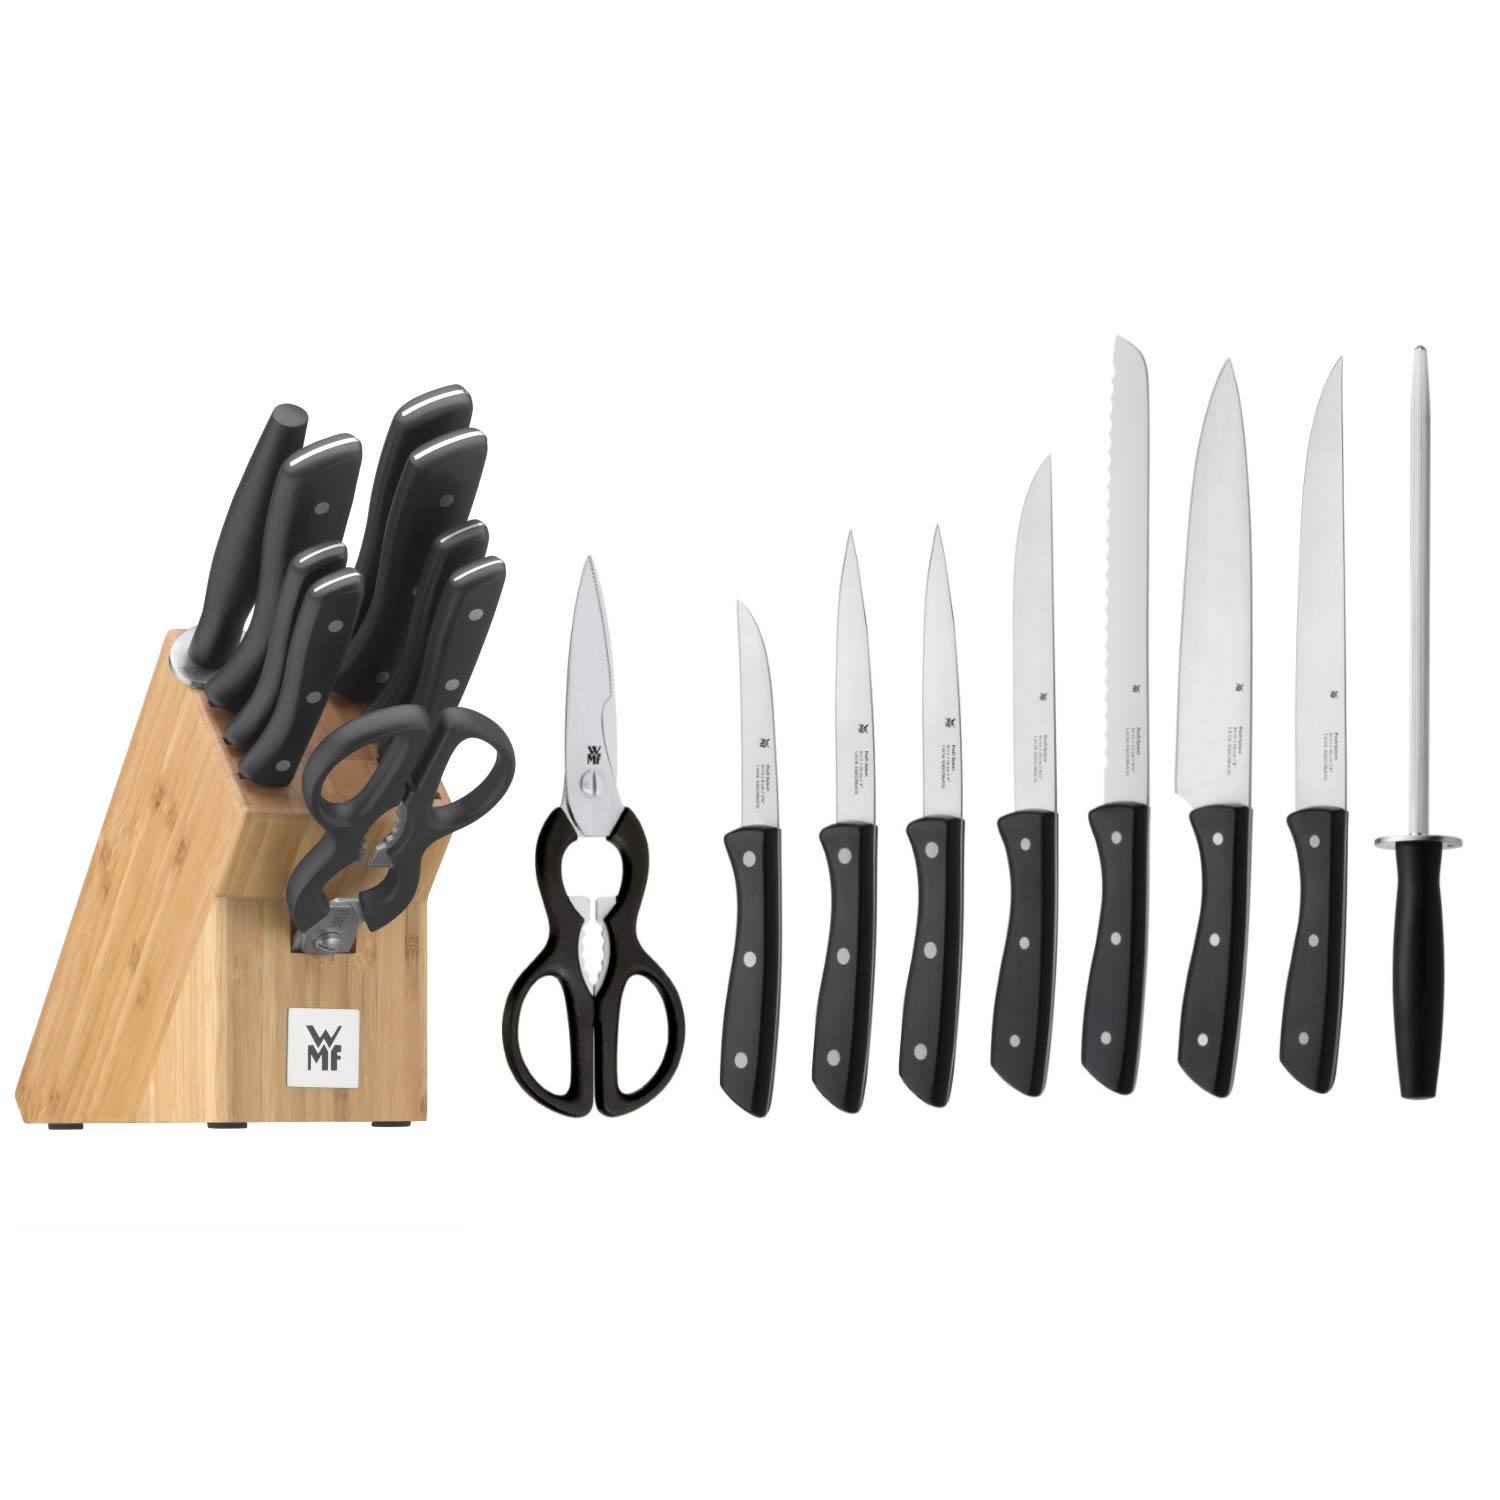 http://honestforwarder.com/uploads/product/wmf-profiselect-knife-block-with-knife-set-10-pieces-7-forged-knives-1-scissors-1-sharpening-steel-1-oak-block-special-blade-steel-stainless-steel-rivets0.jpg